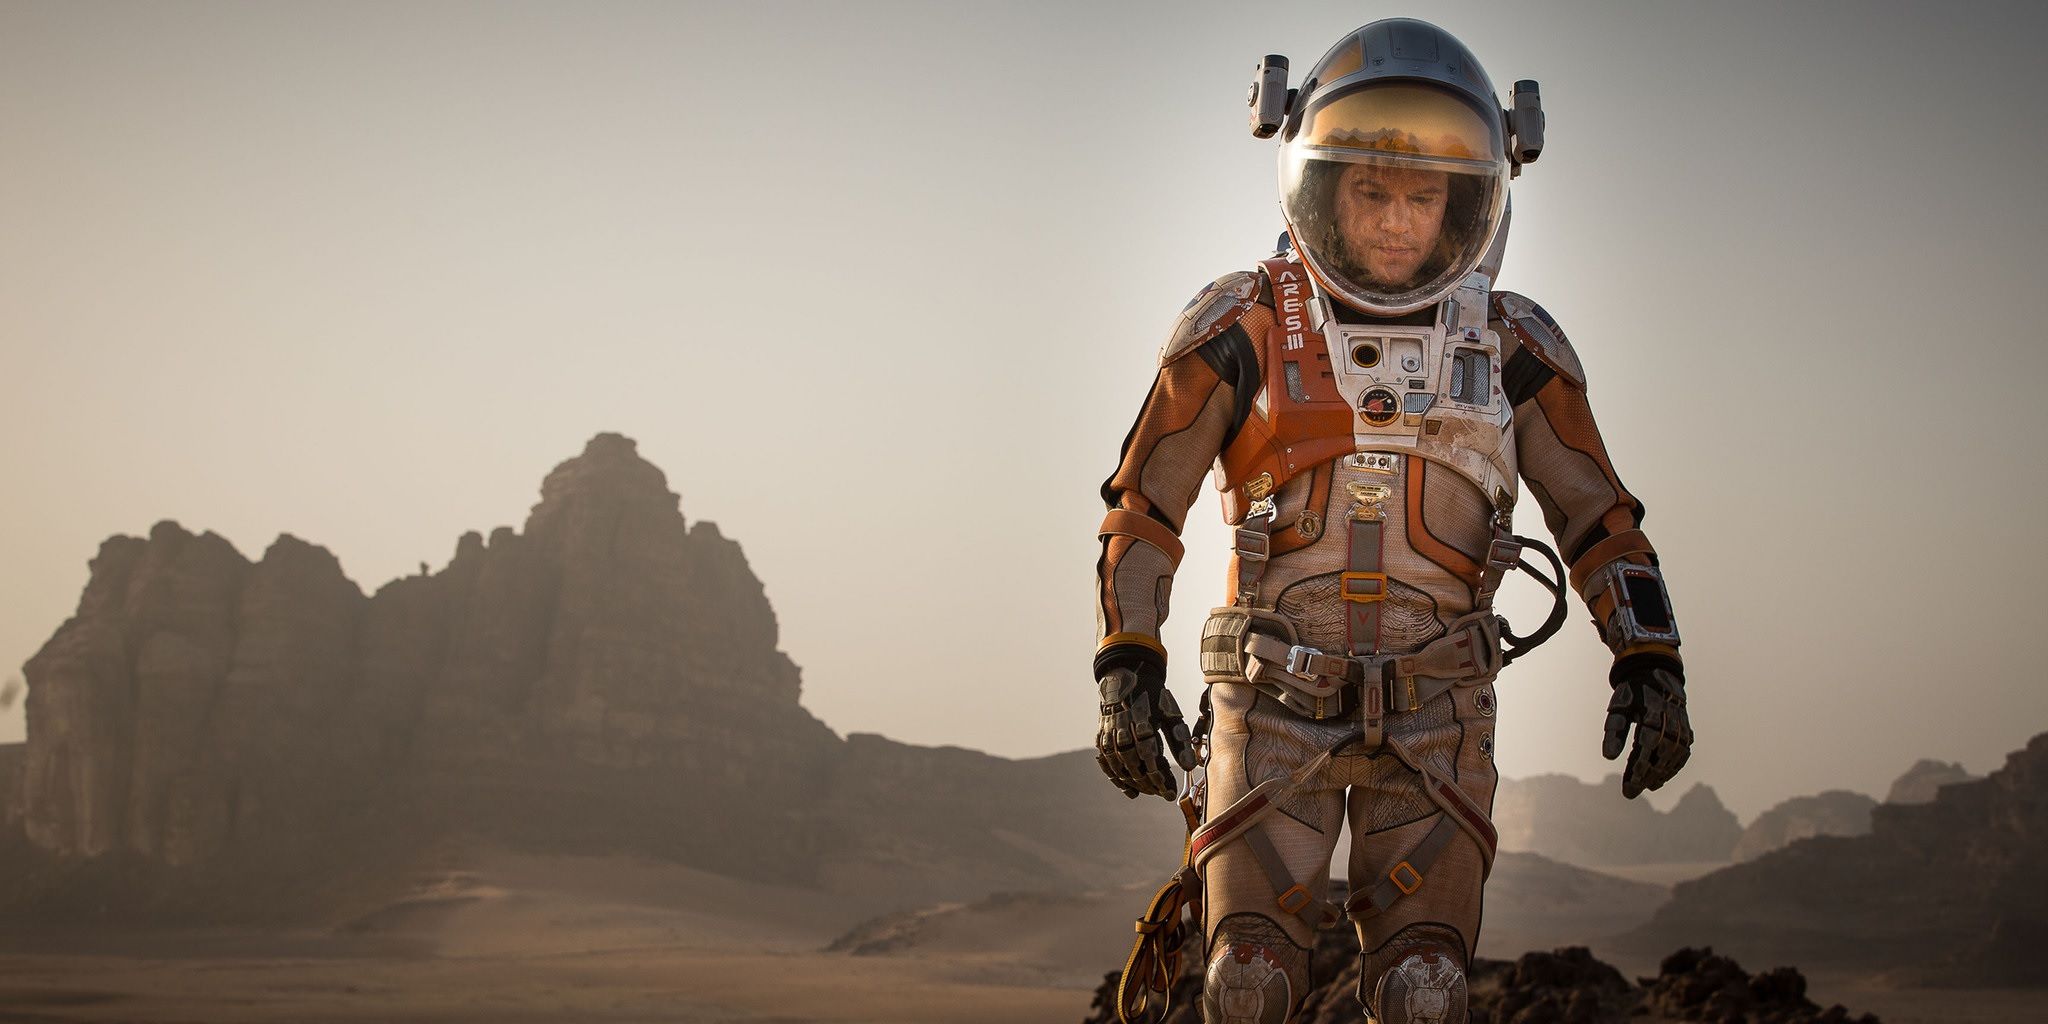 Matt Damon as Mark Watney on Mars in The Martian